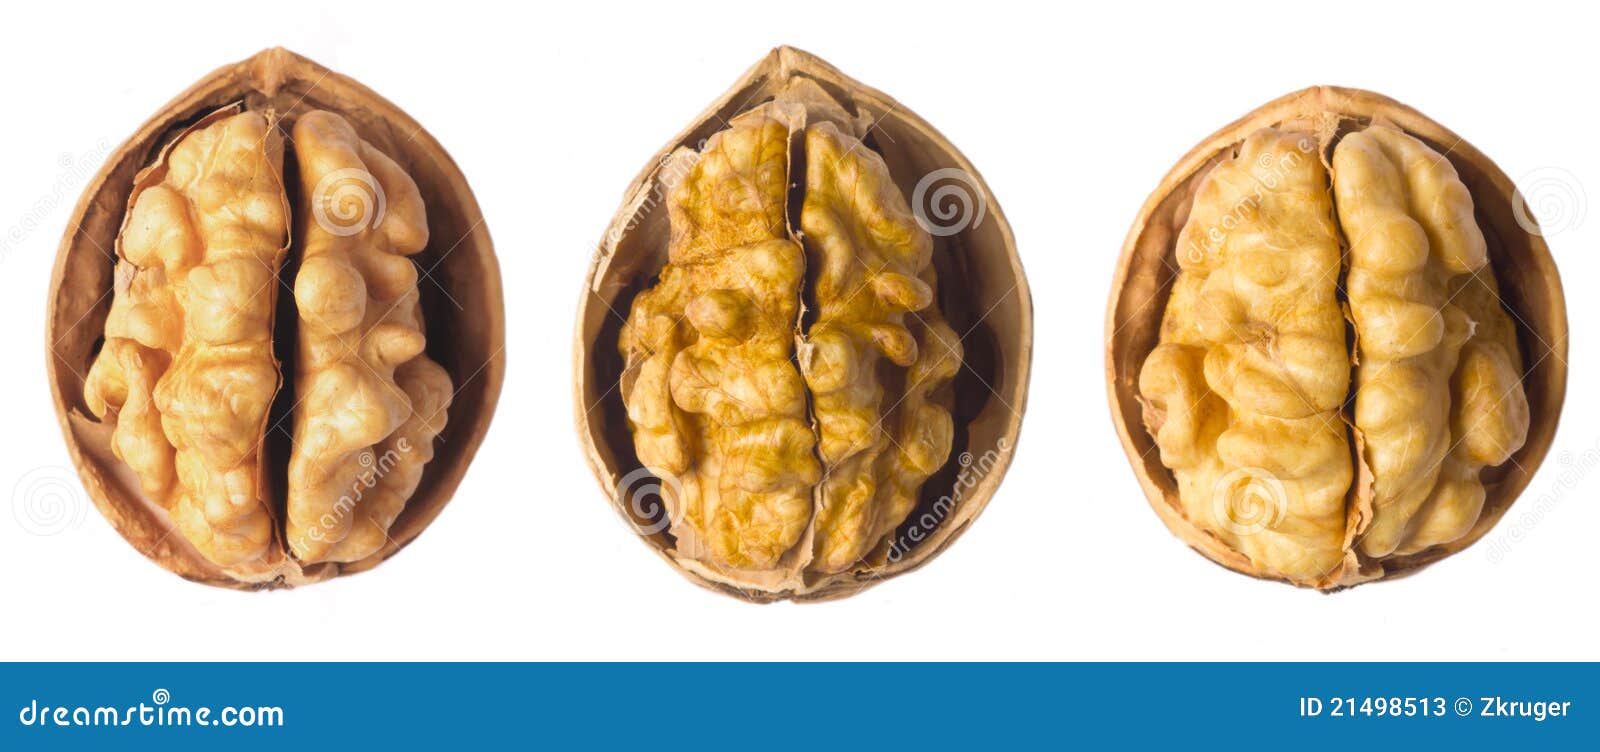 Грецкие орехи похожи на мозги. Грецкий орех и мозг. Орехи для мозга. Грецкий орех похож на мозг. Мозг с орешек.